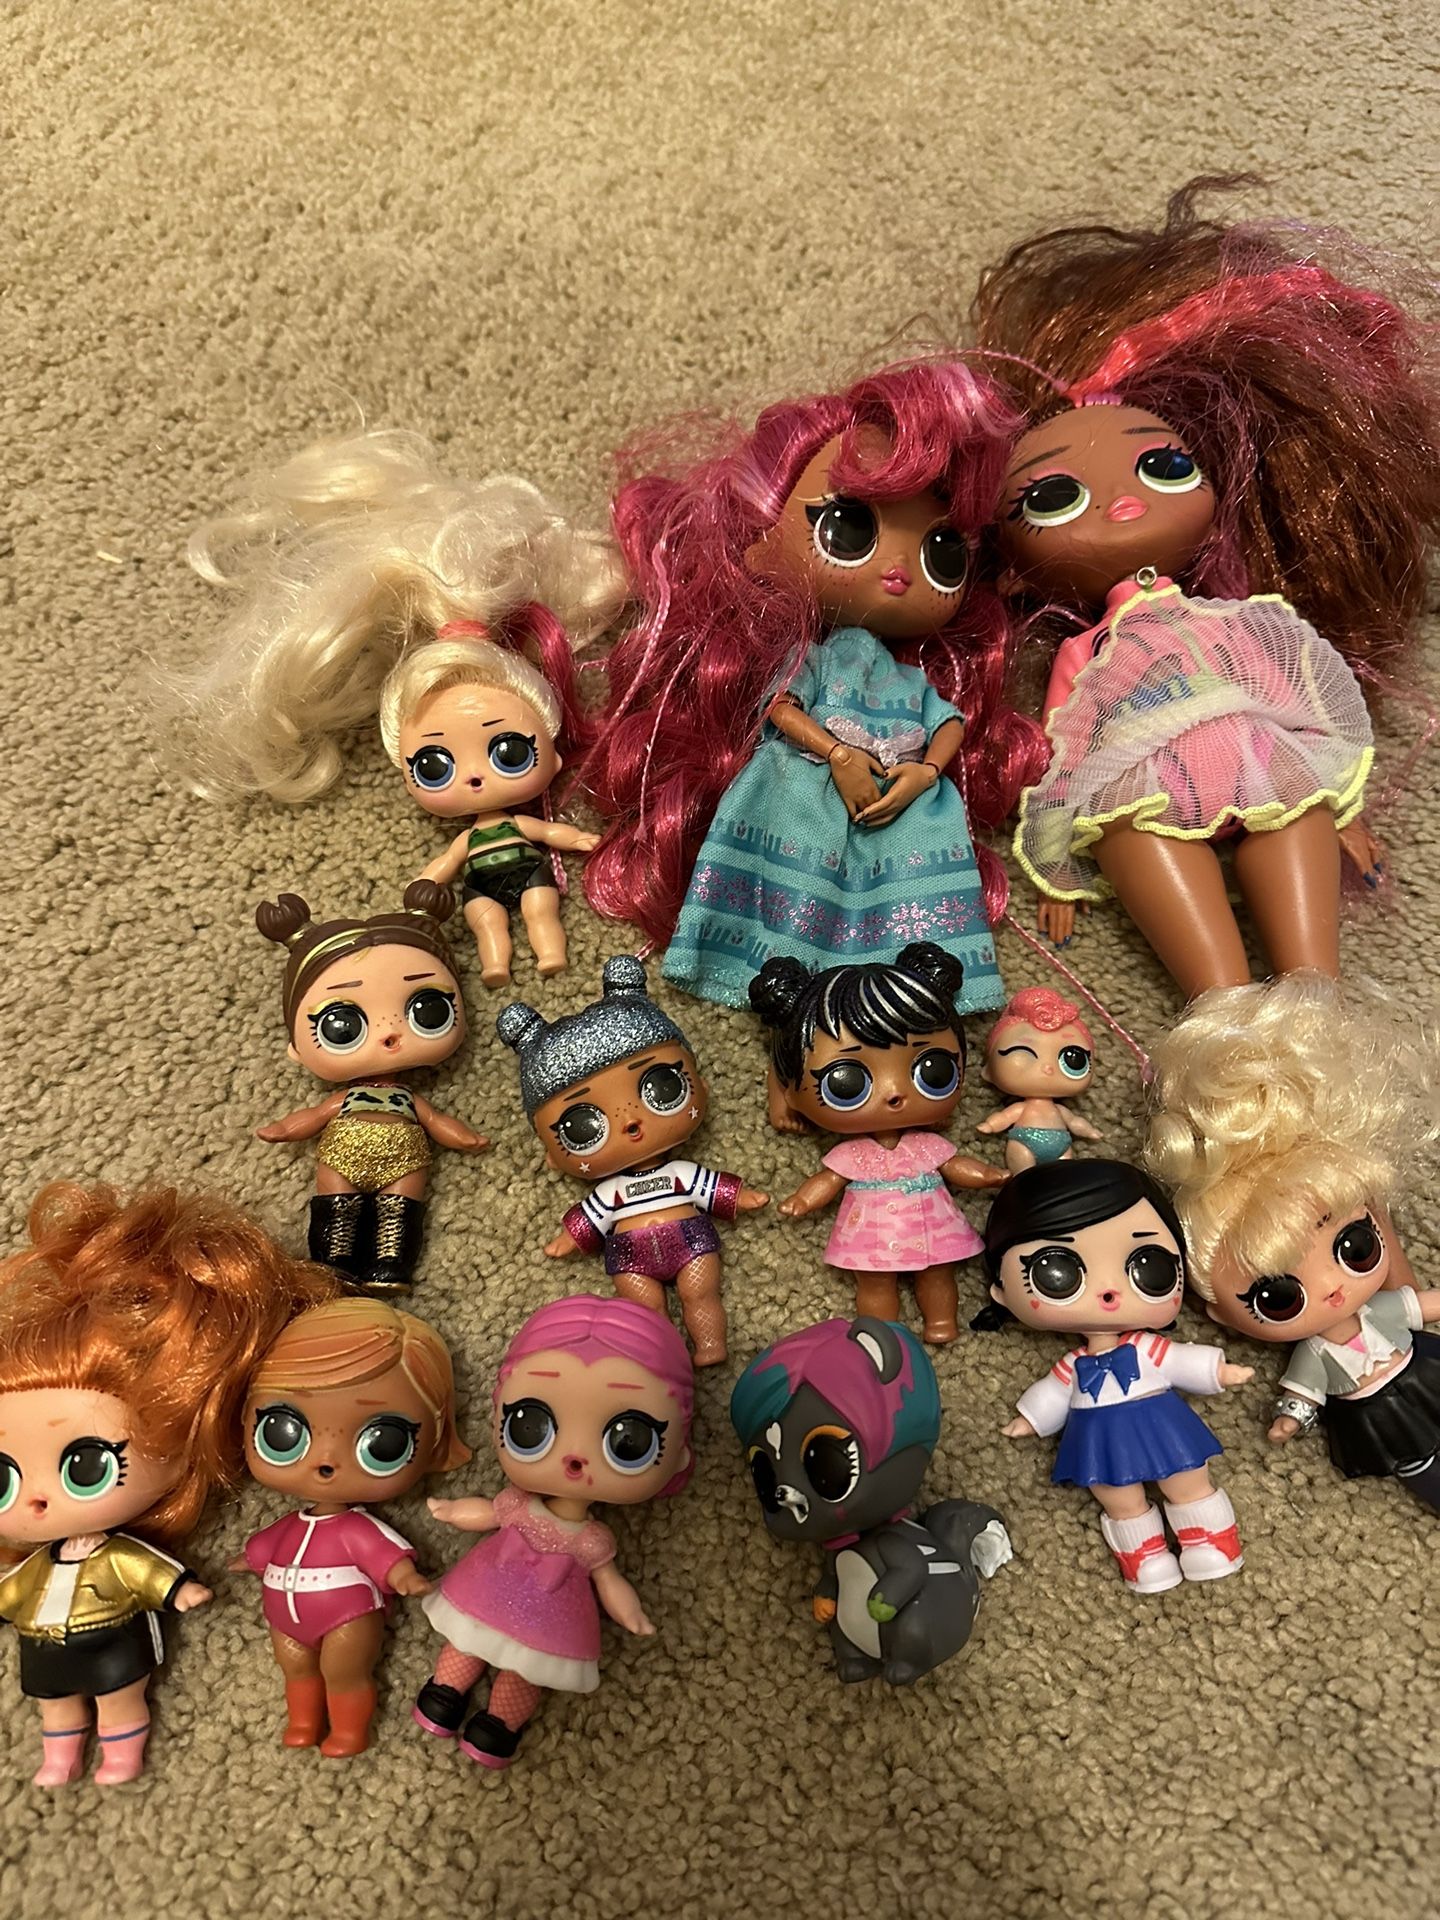 LOL Dolls All For 15$